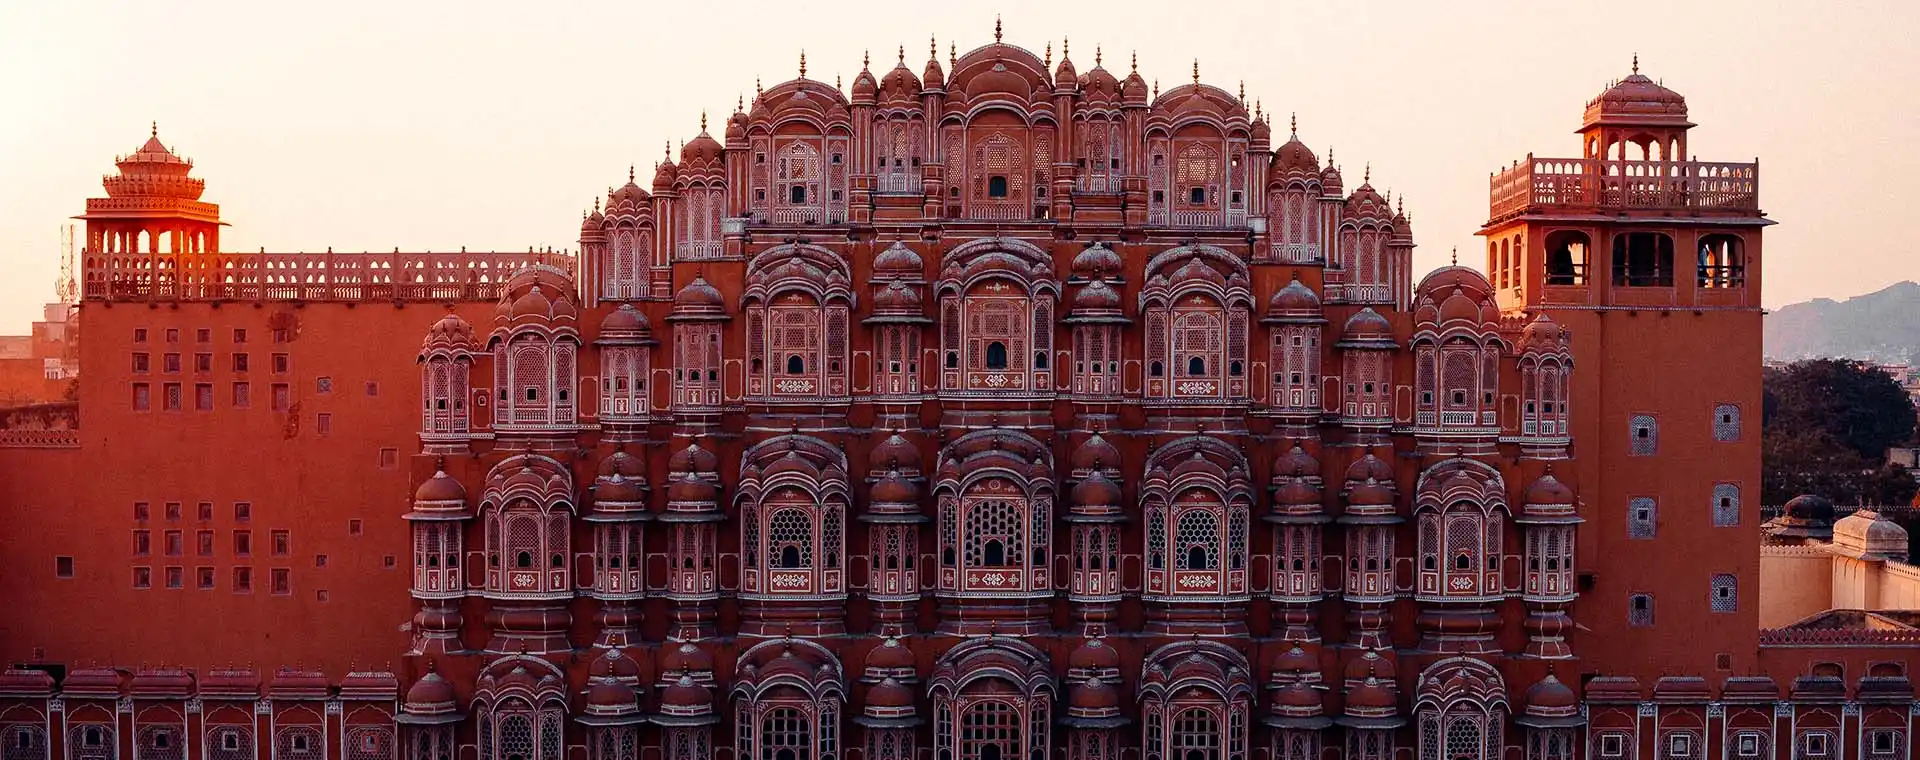 Temples in Jaipur